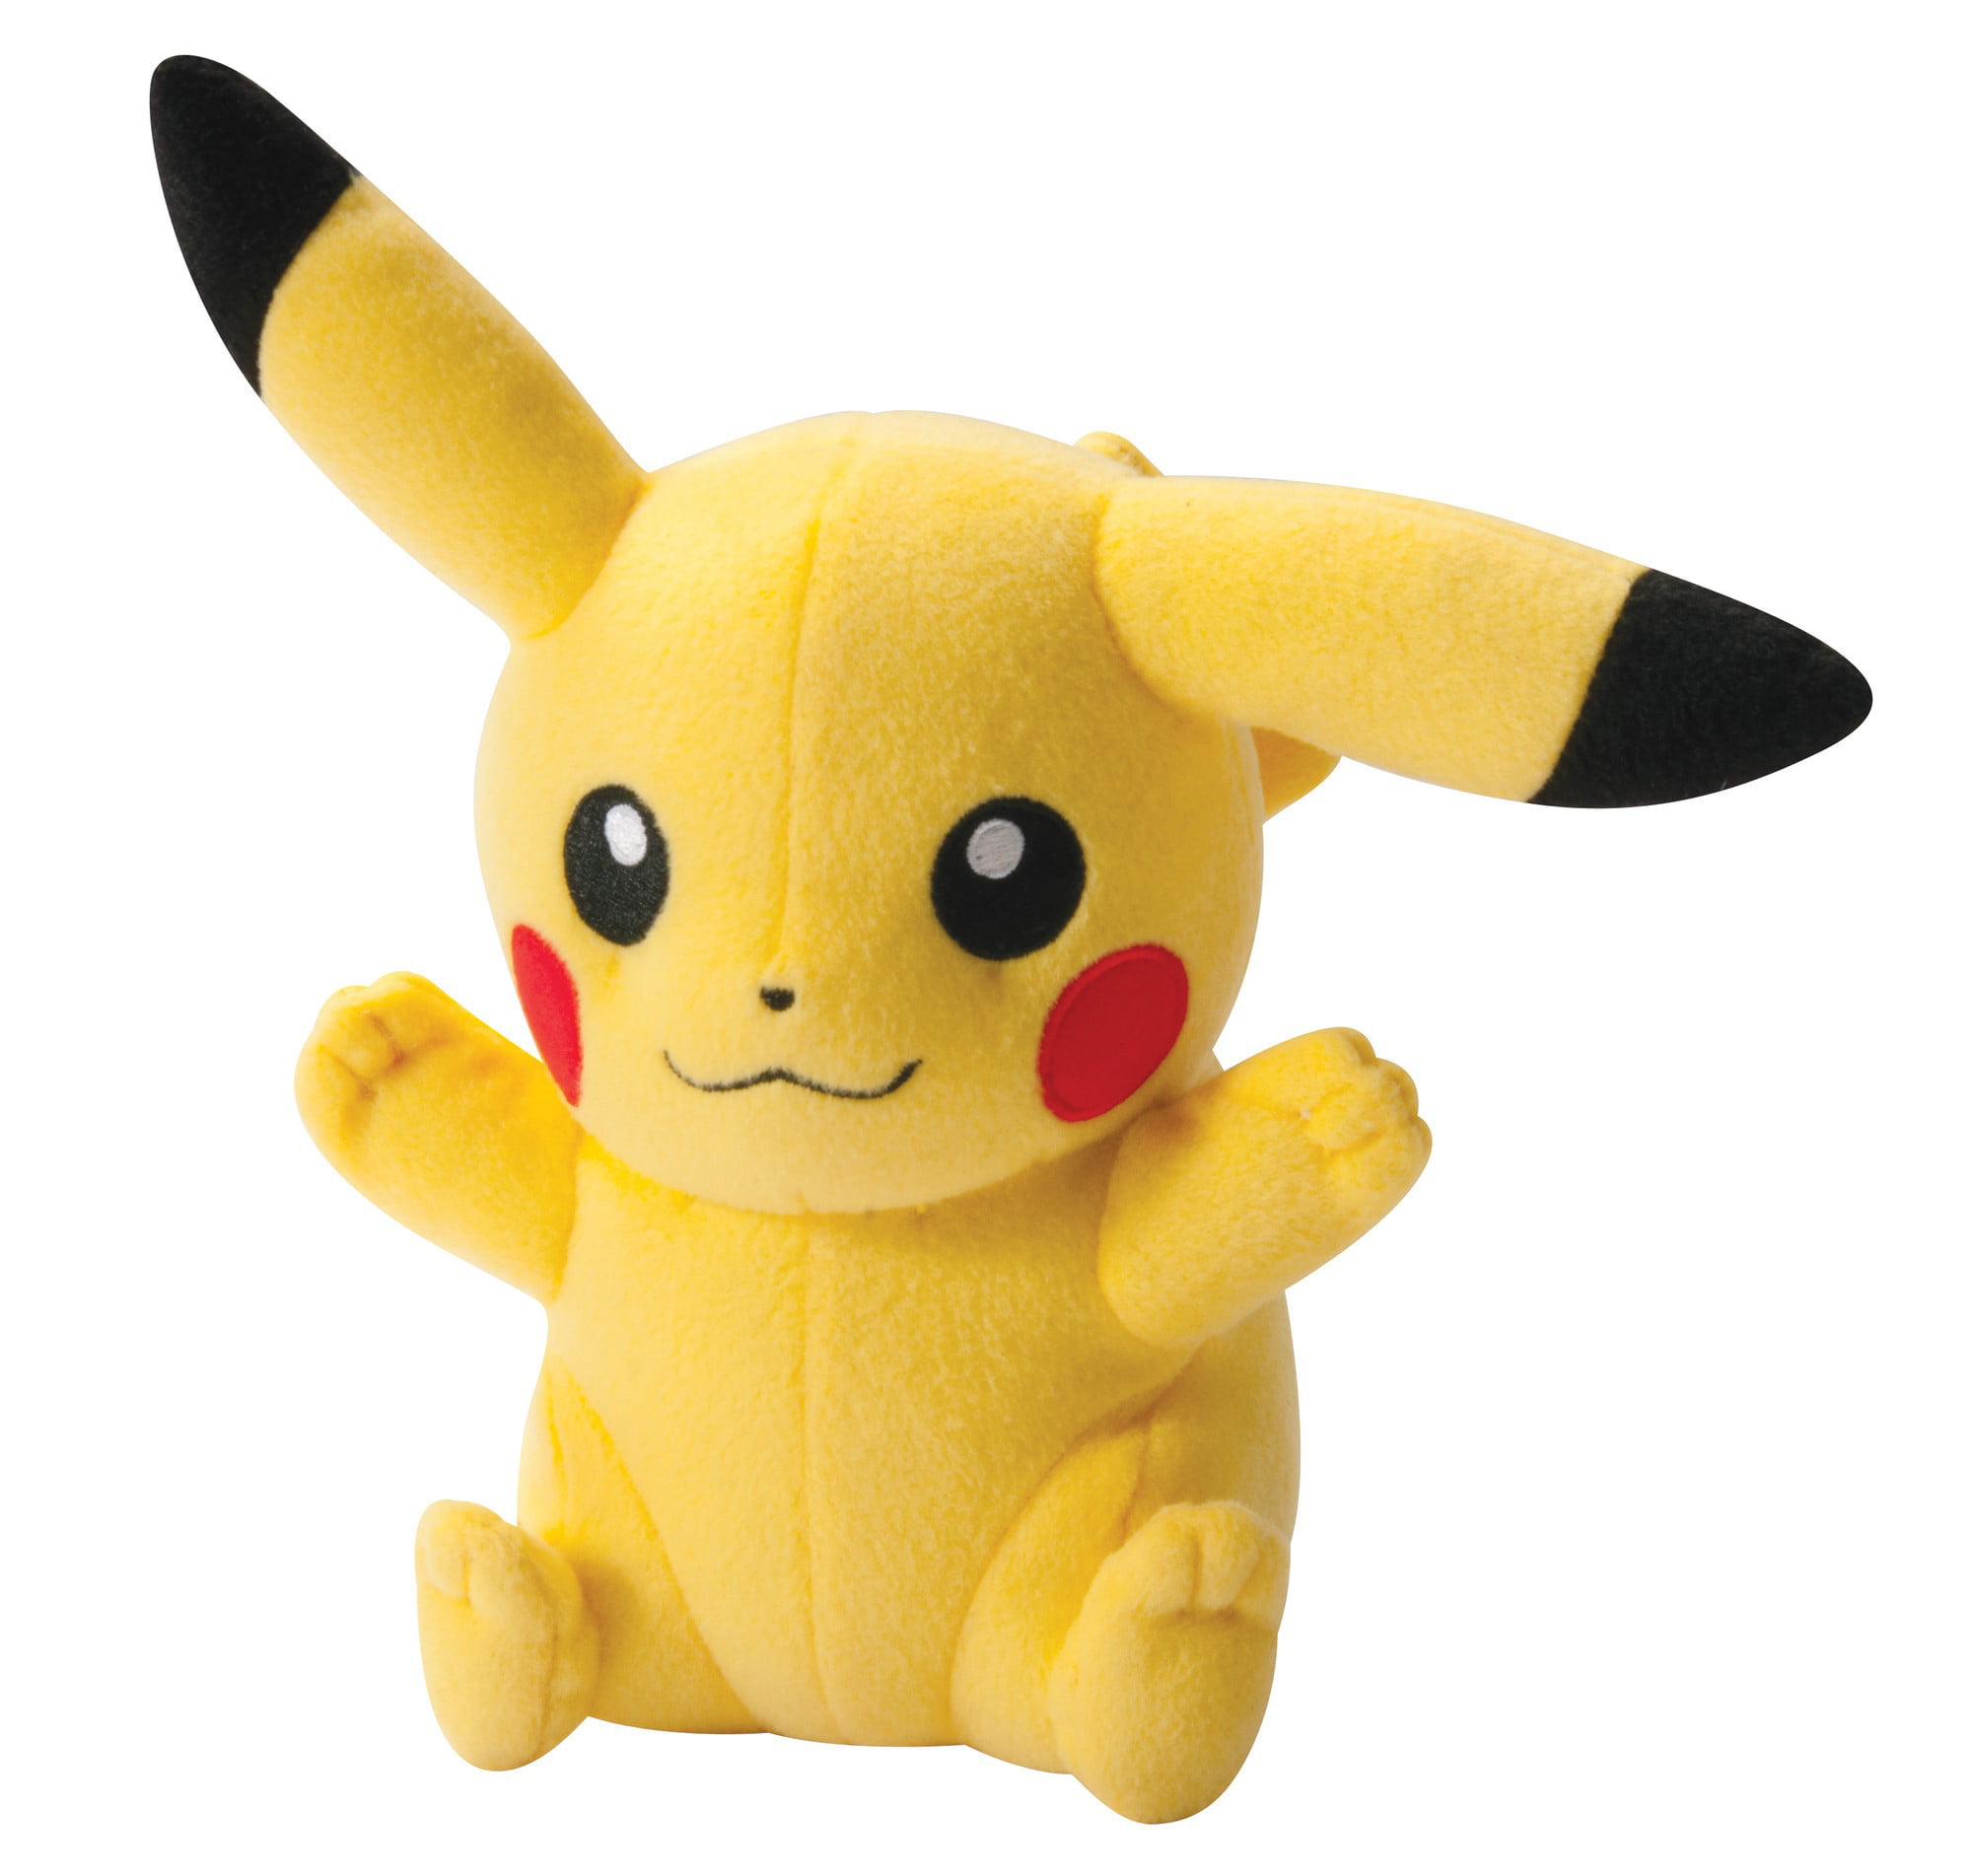 where can i buy pikachu stuffed animal